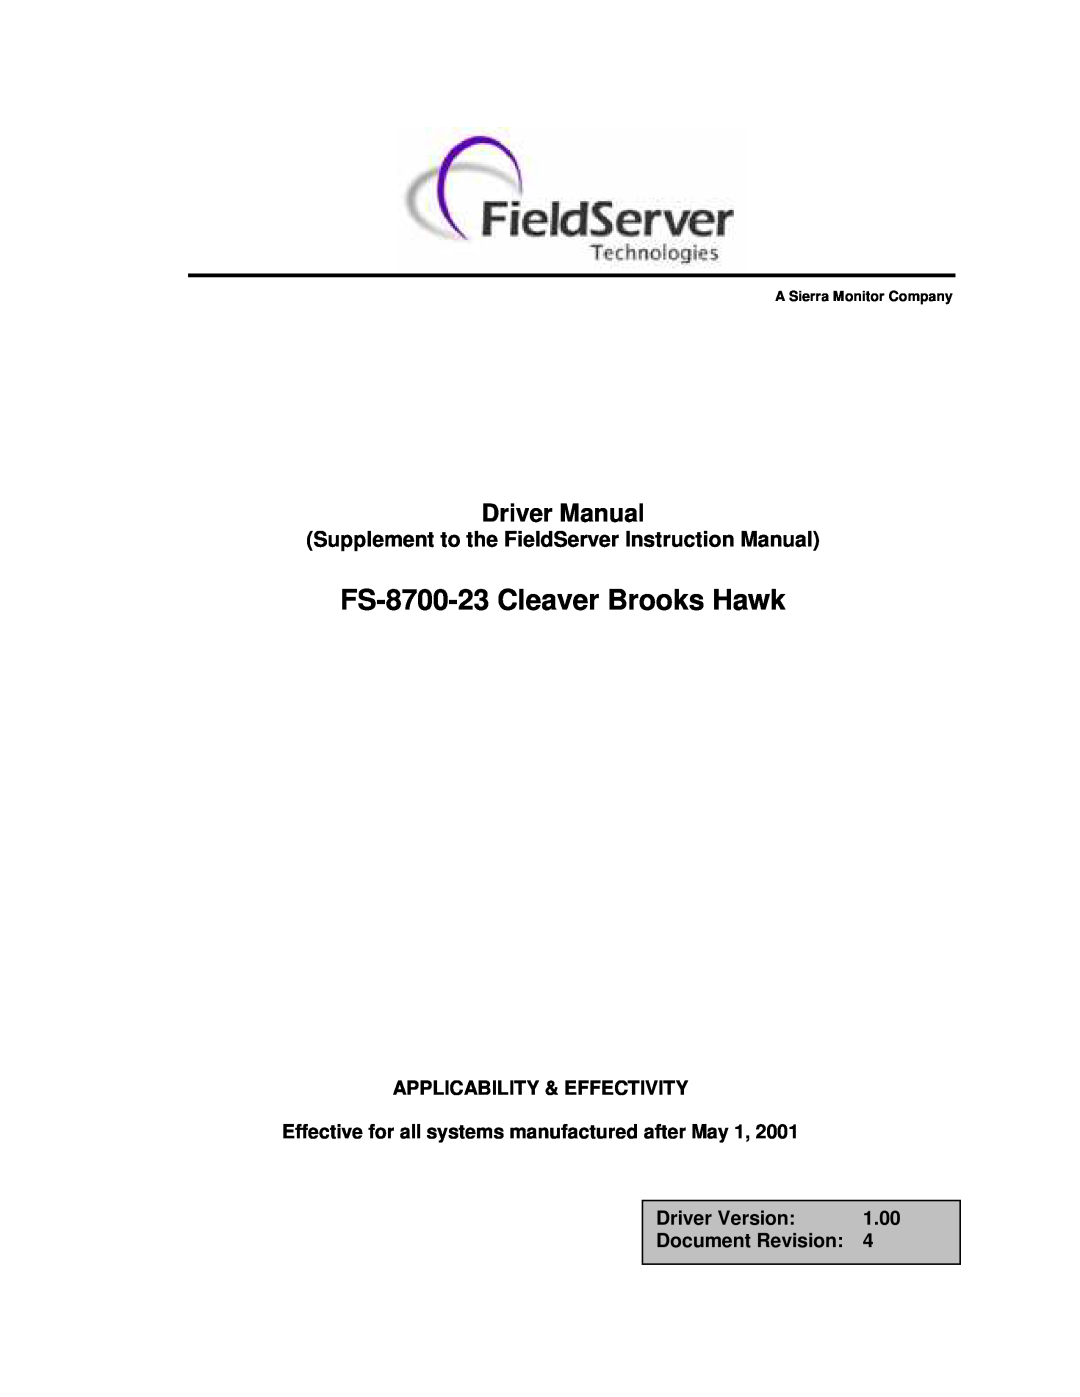 FieldServer instruction manual FS-8700-23 Cleaver Brooks Hawk, Supplement to the FieldServer Instruction Manual, 1.00 